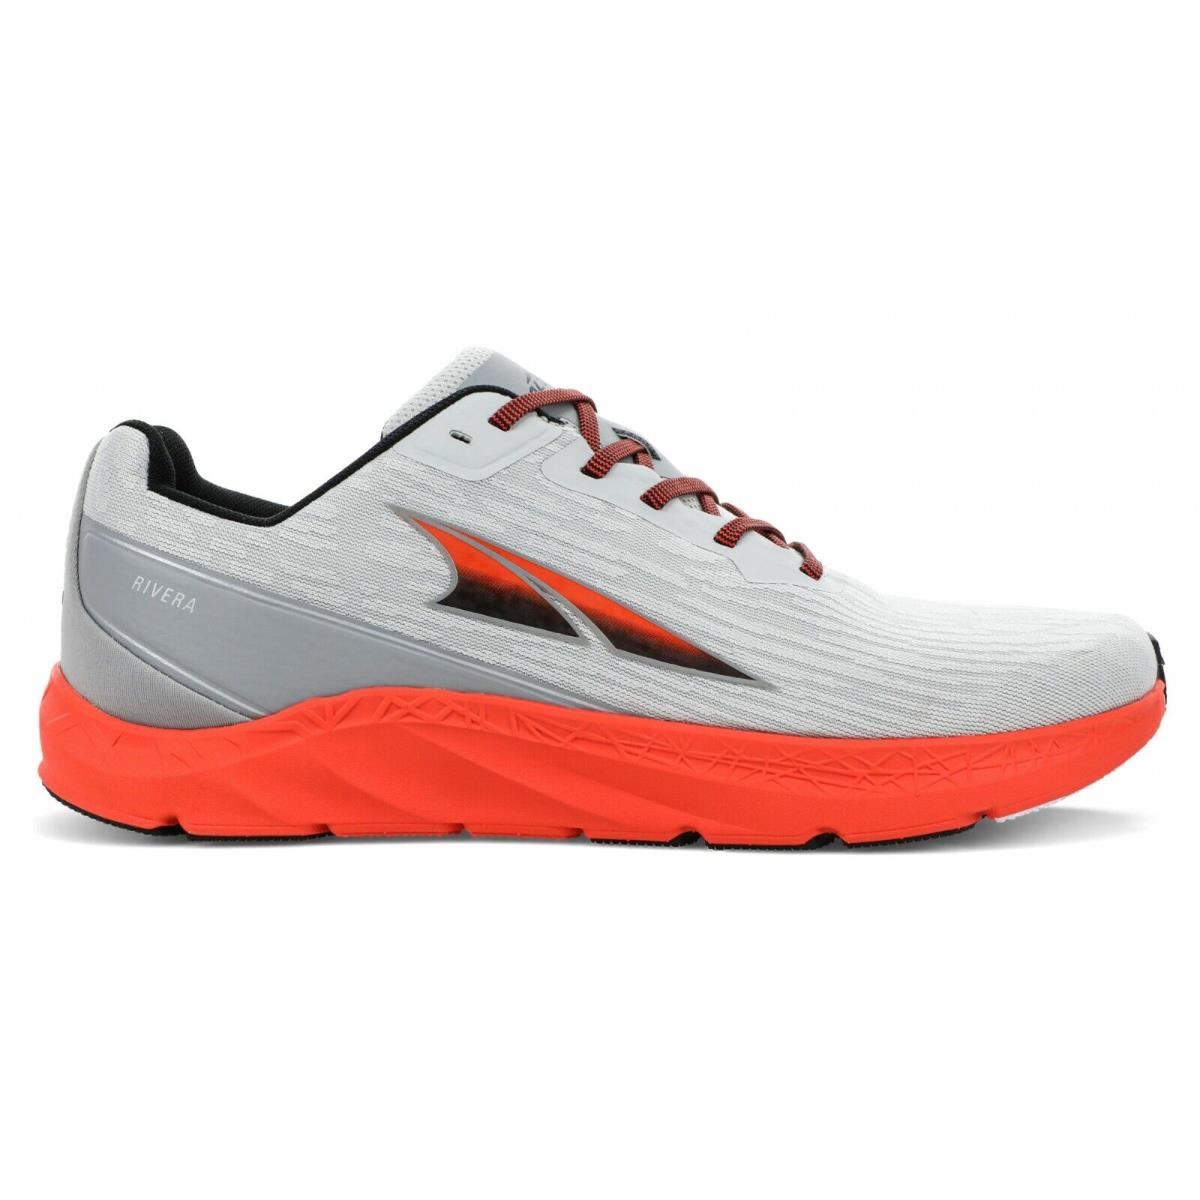 Altra Rivera Athletic Shoes Men`s Gray Orange Size 9.5 / 10 - Gray